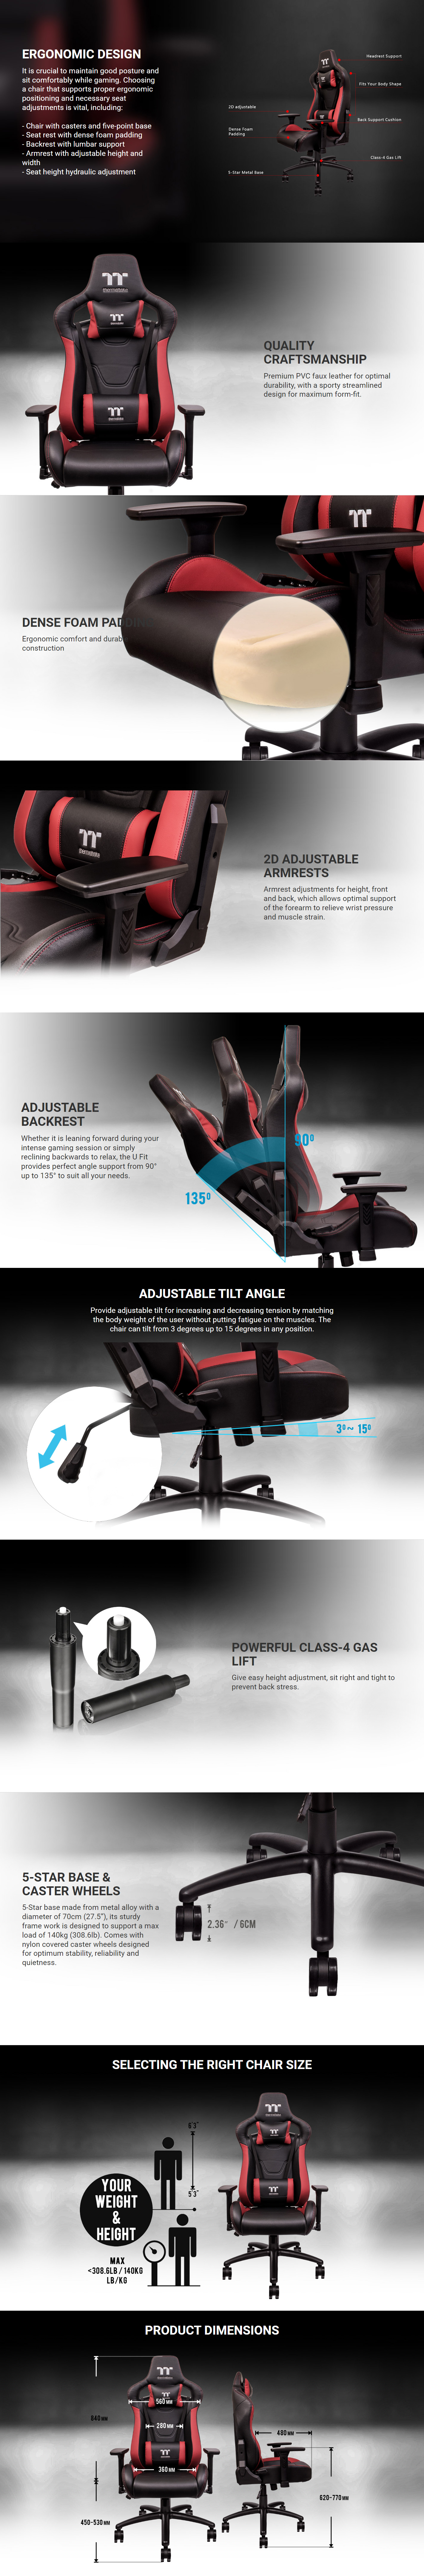 Gaming-Chairs-Thermaltake-U-Fit-Gaming-Chair-Black-Red-2